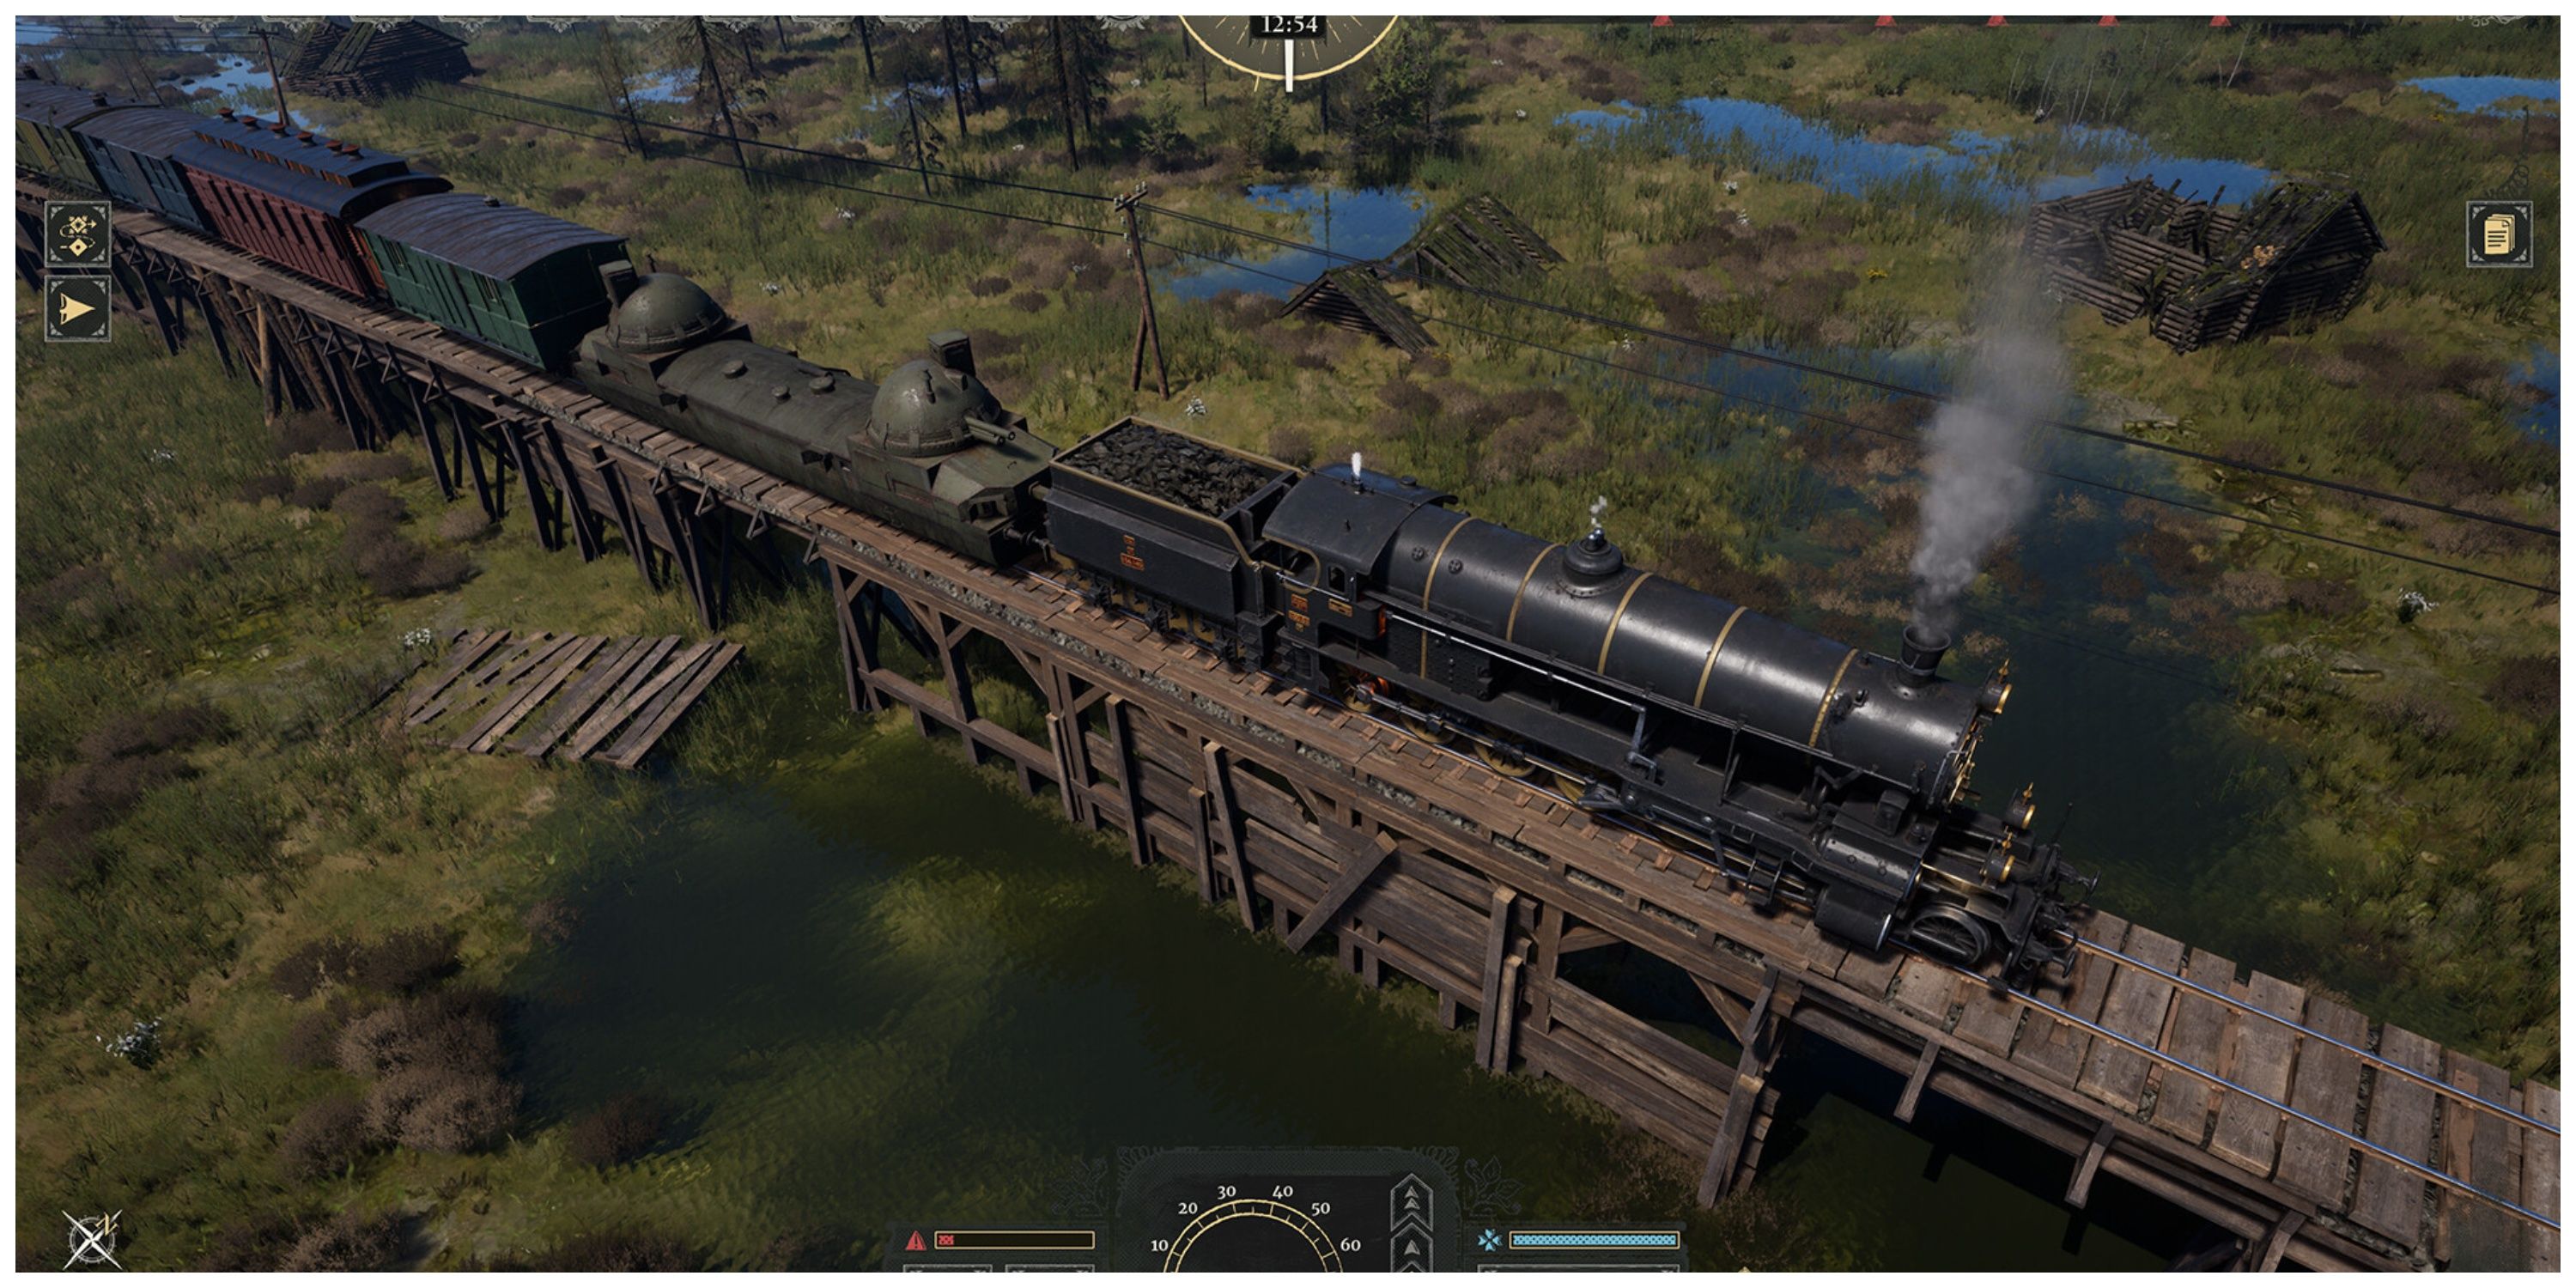 Last Train Home - Steam Store Page Screenshot